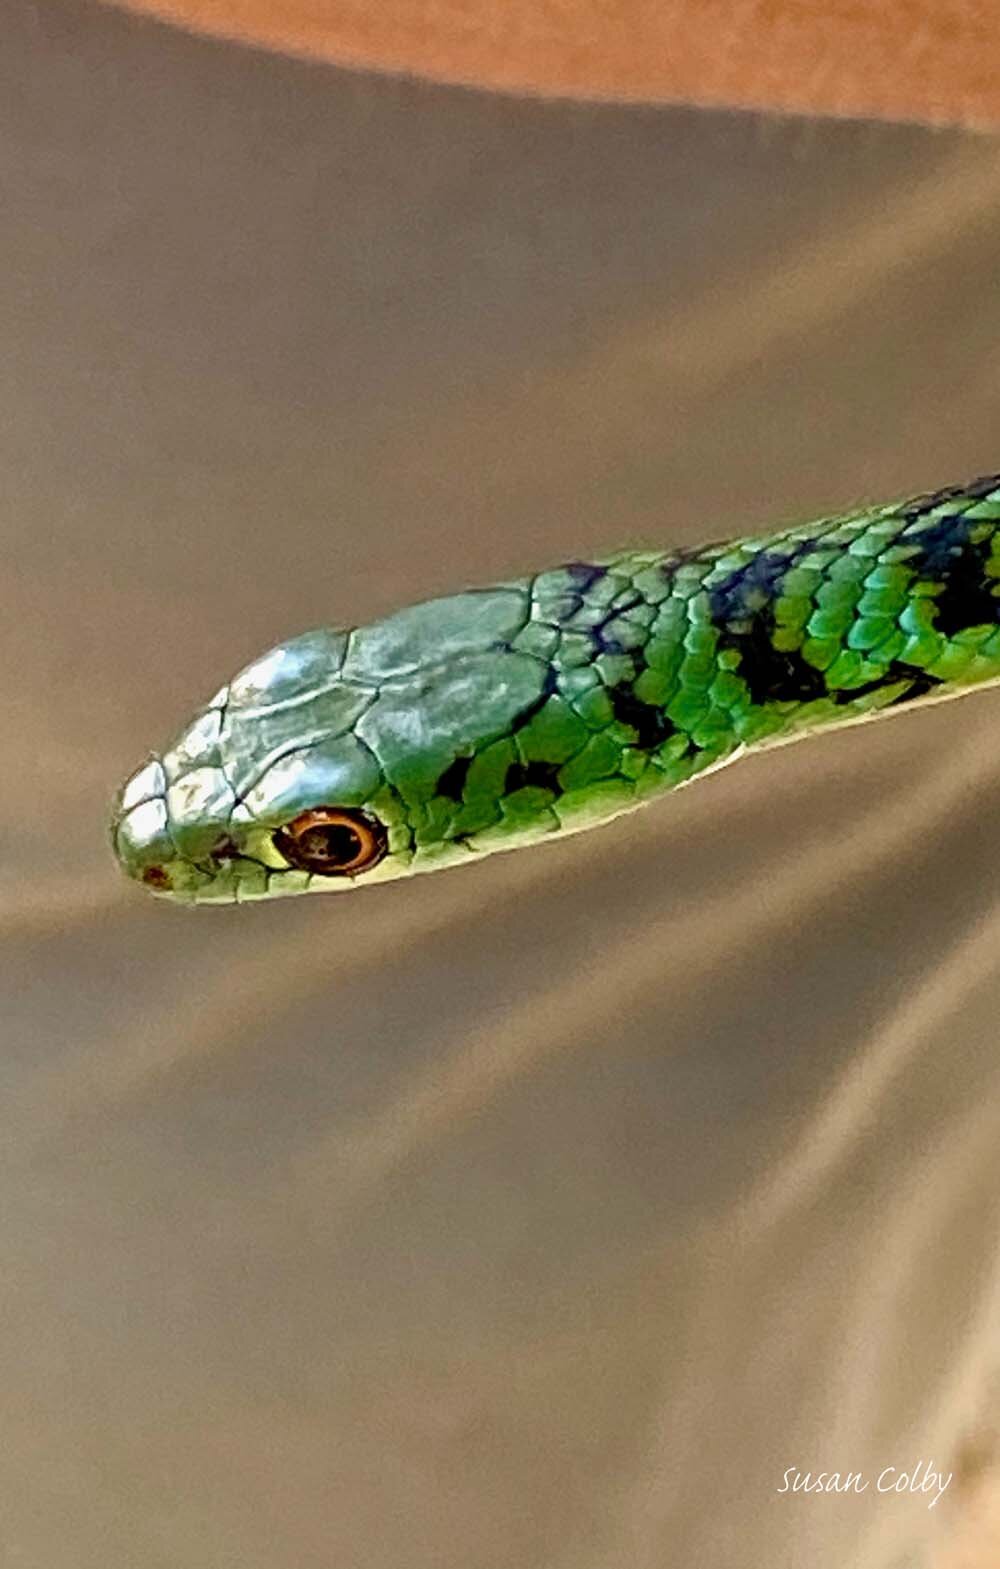 Bush snake